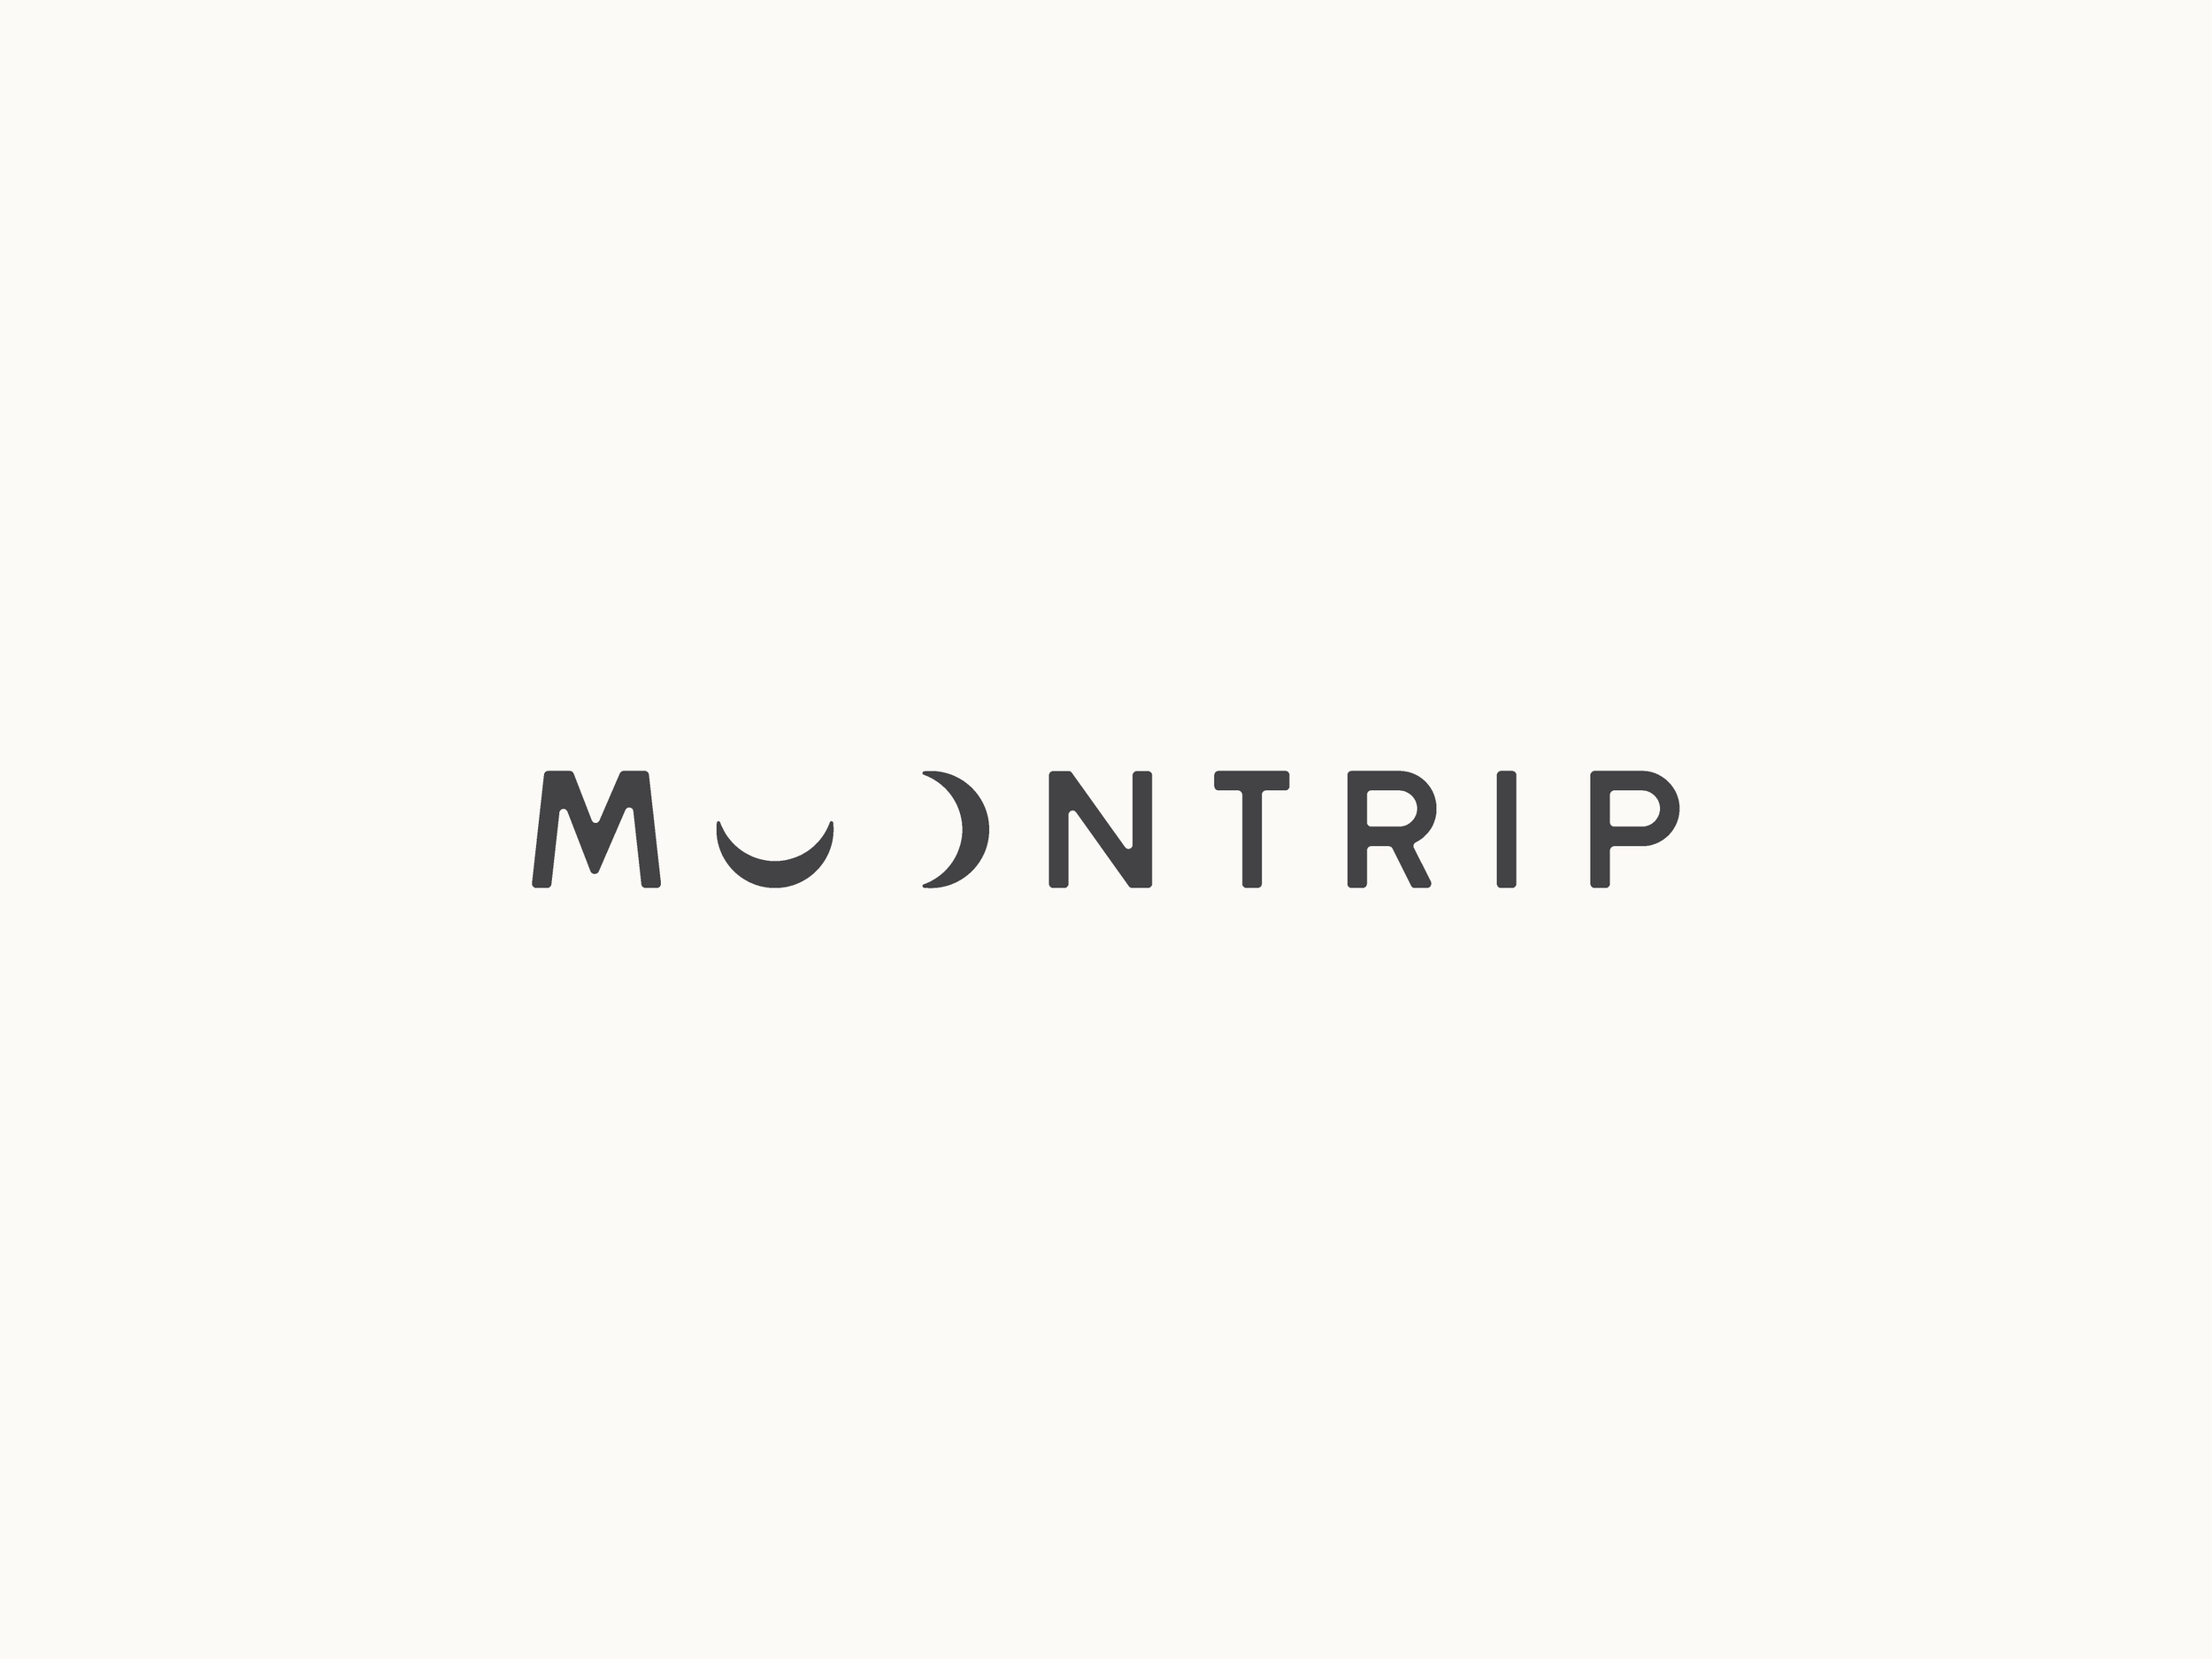 Moontrip Logo-01.png